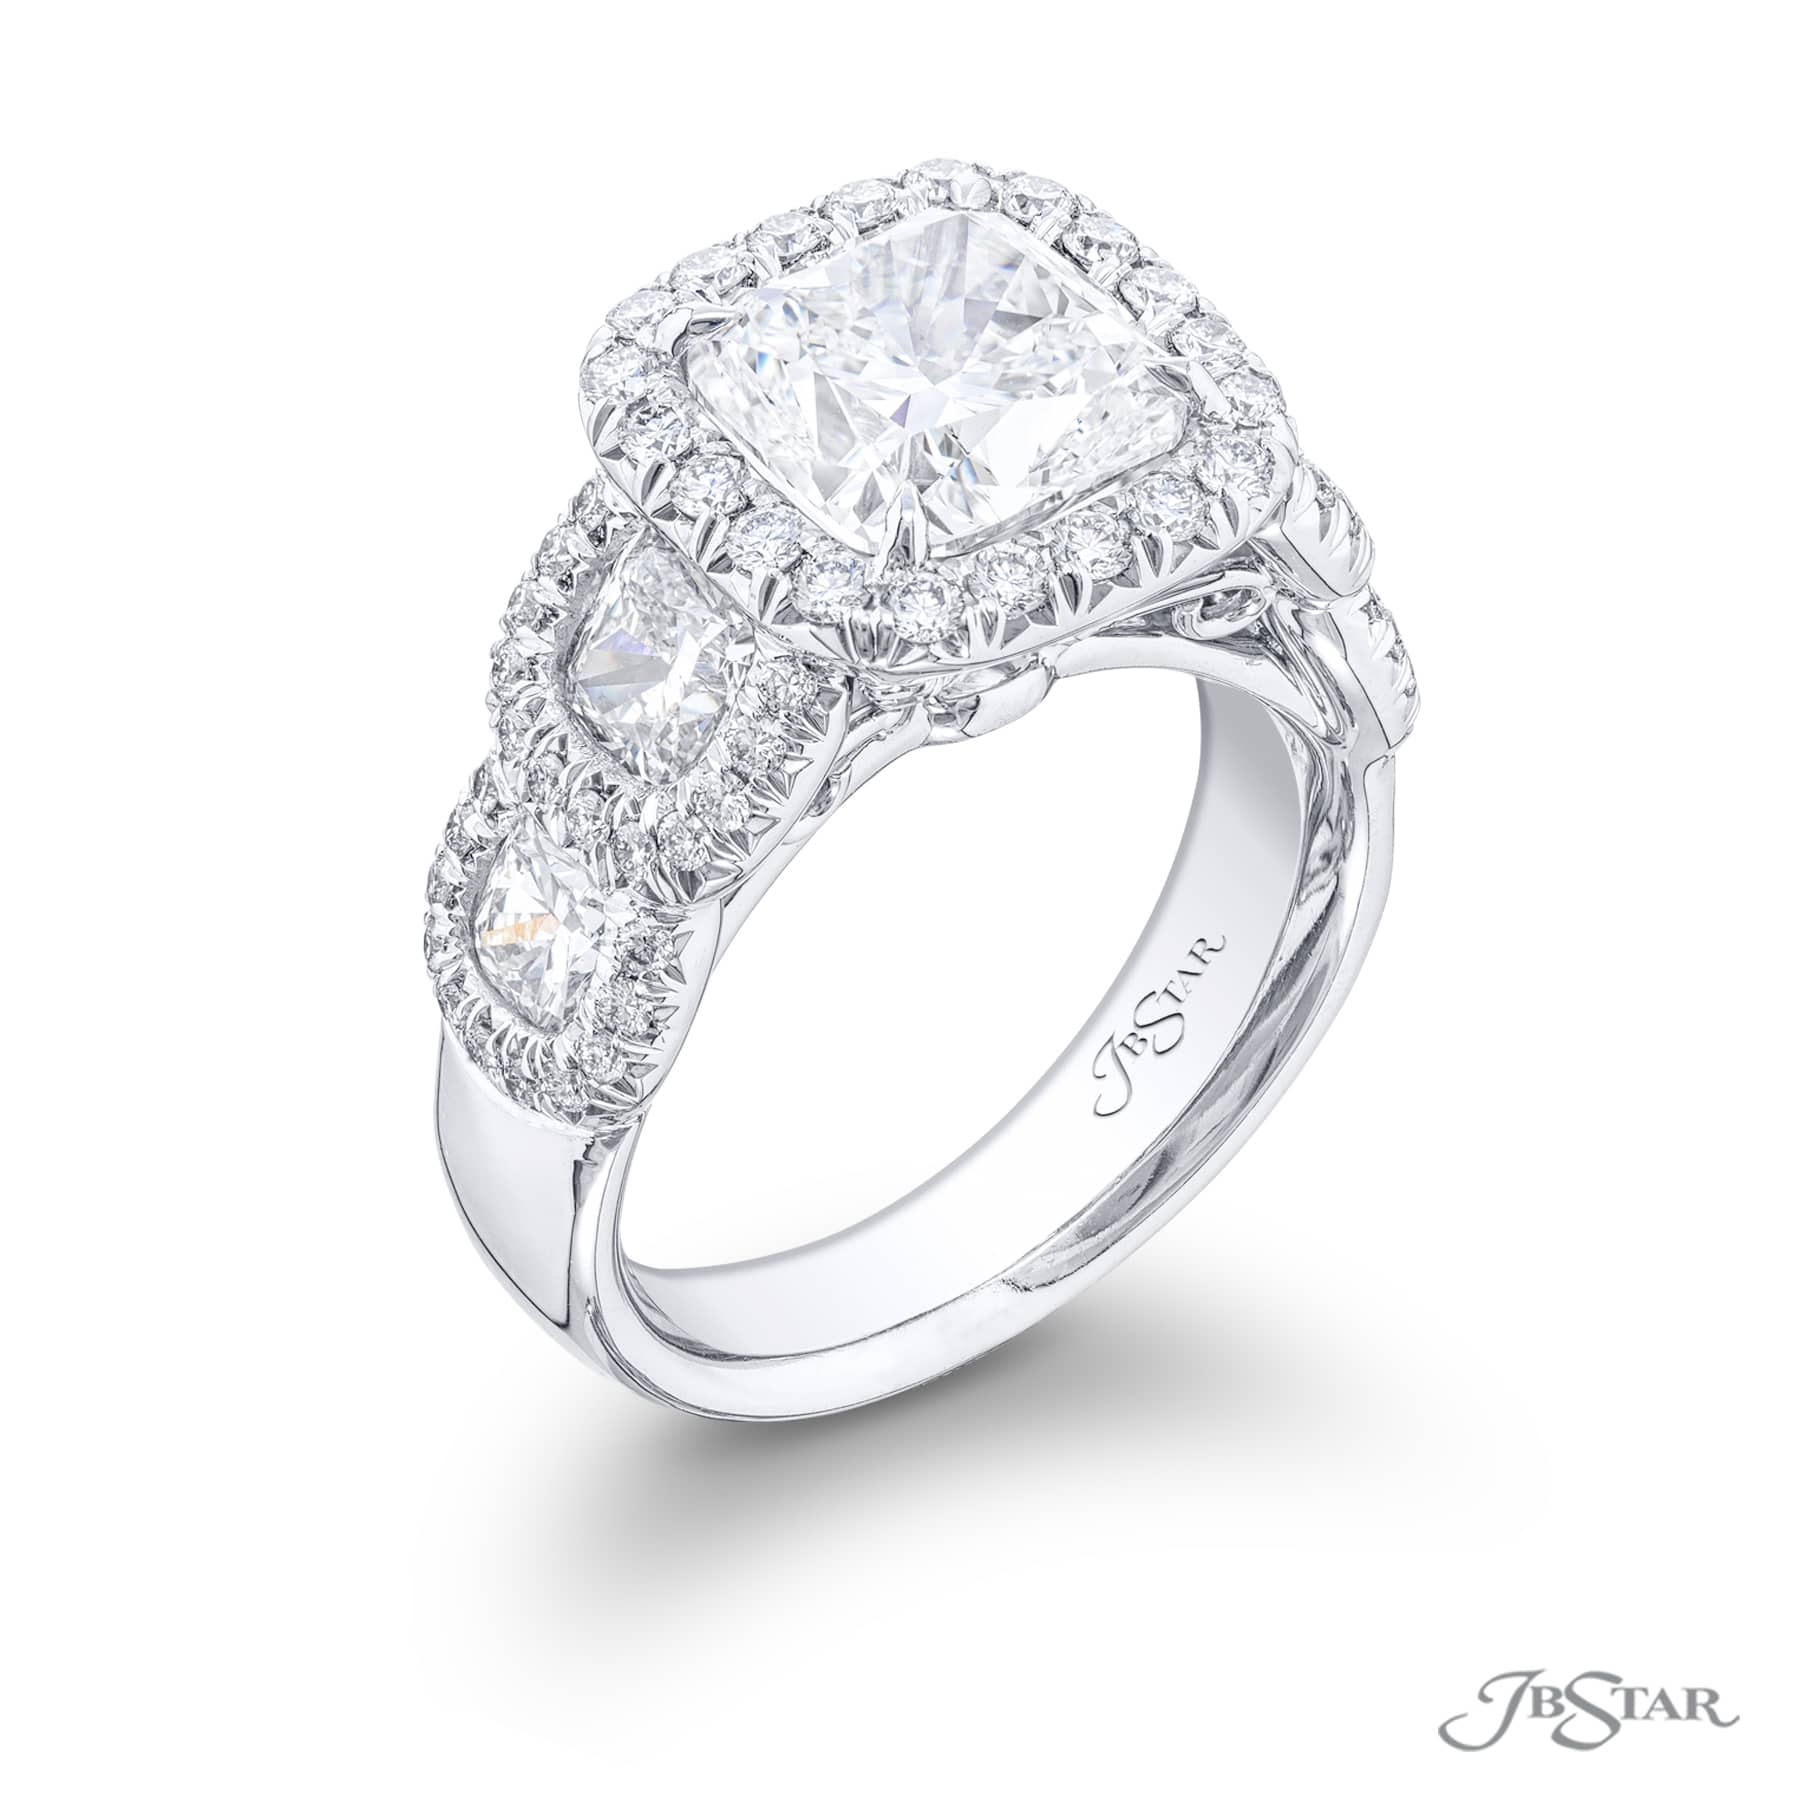 Diamond Engagement Ring 3.02ct. Cushion Cut Micro Pave – JB Star